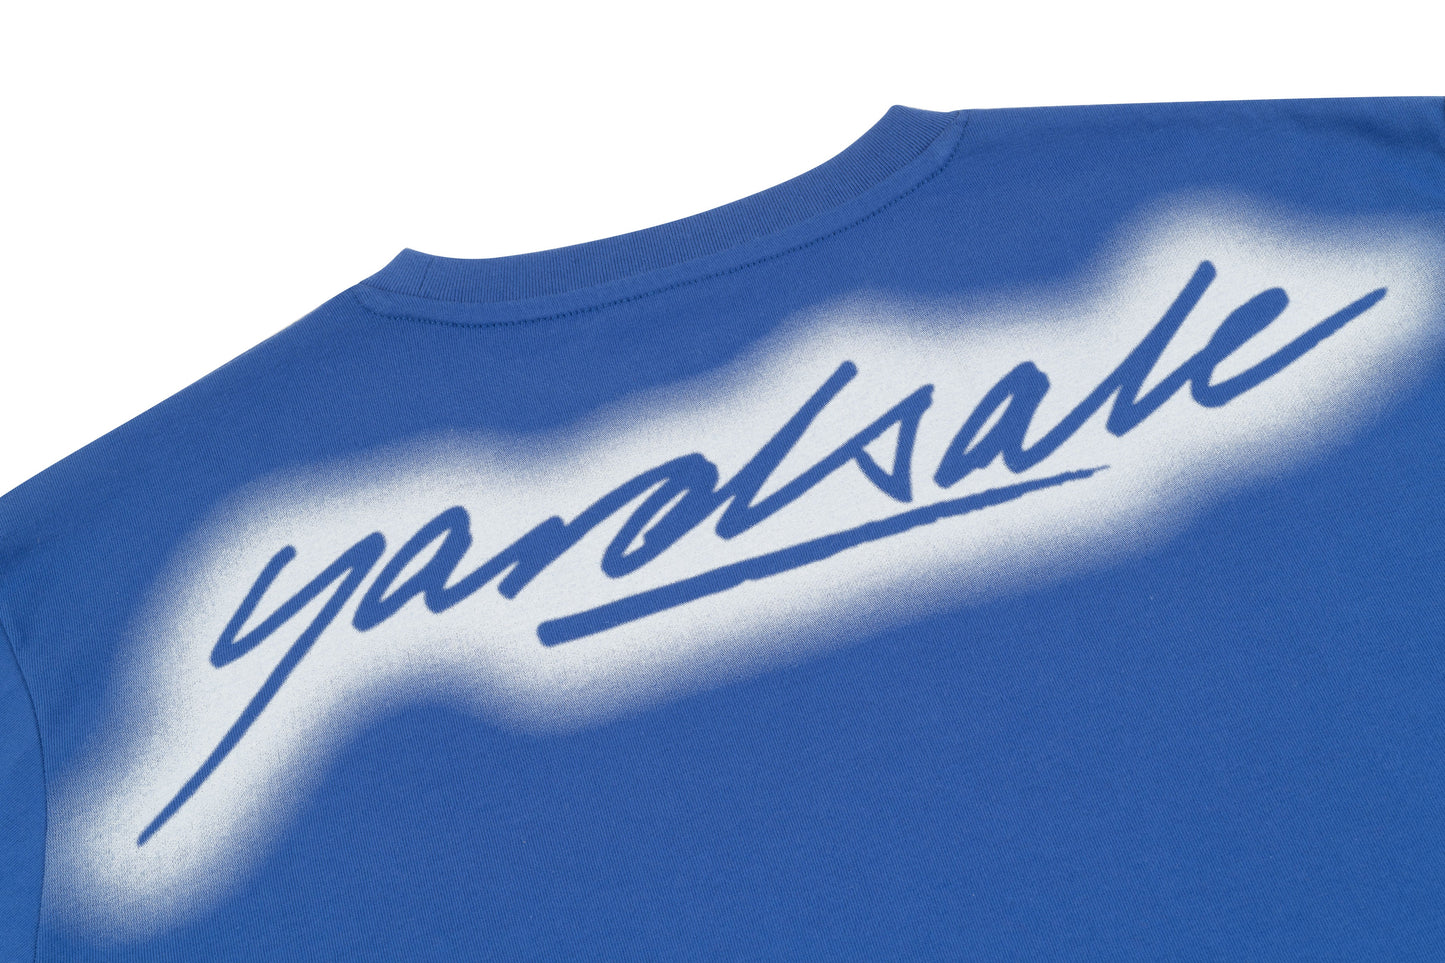 Spray T-Shirt (Blue)